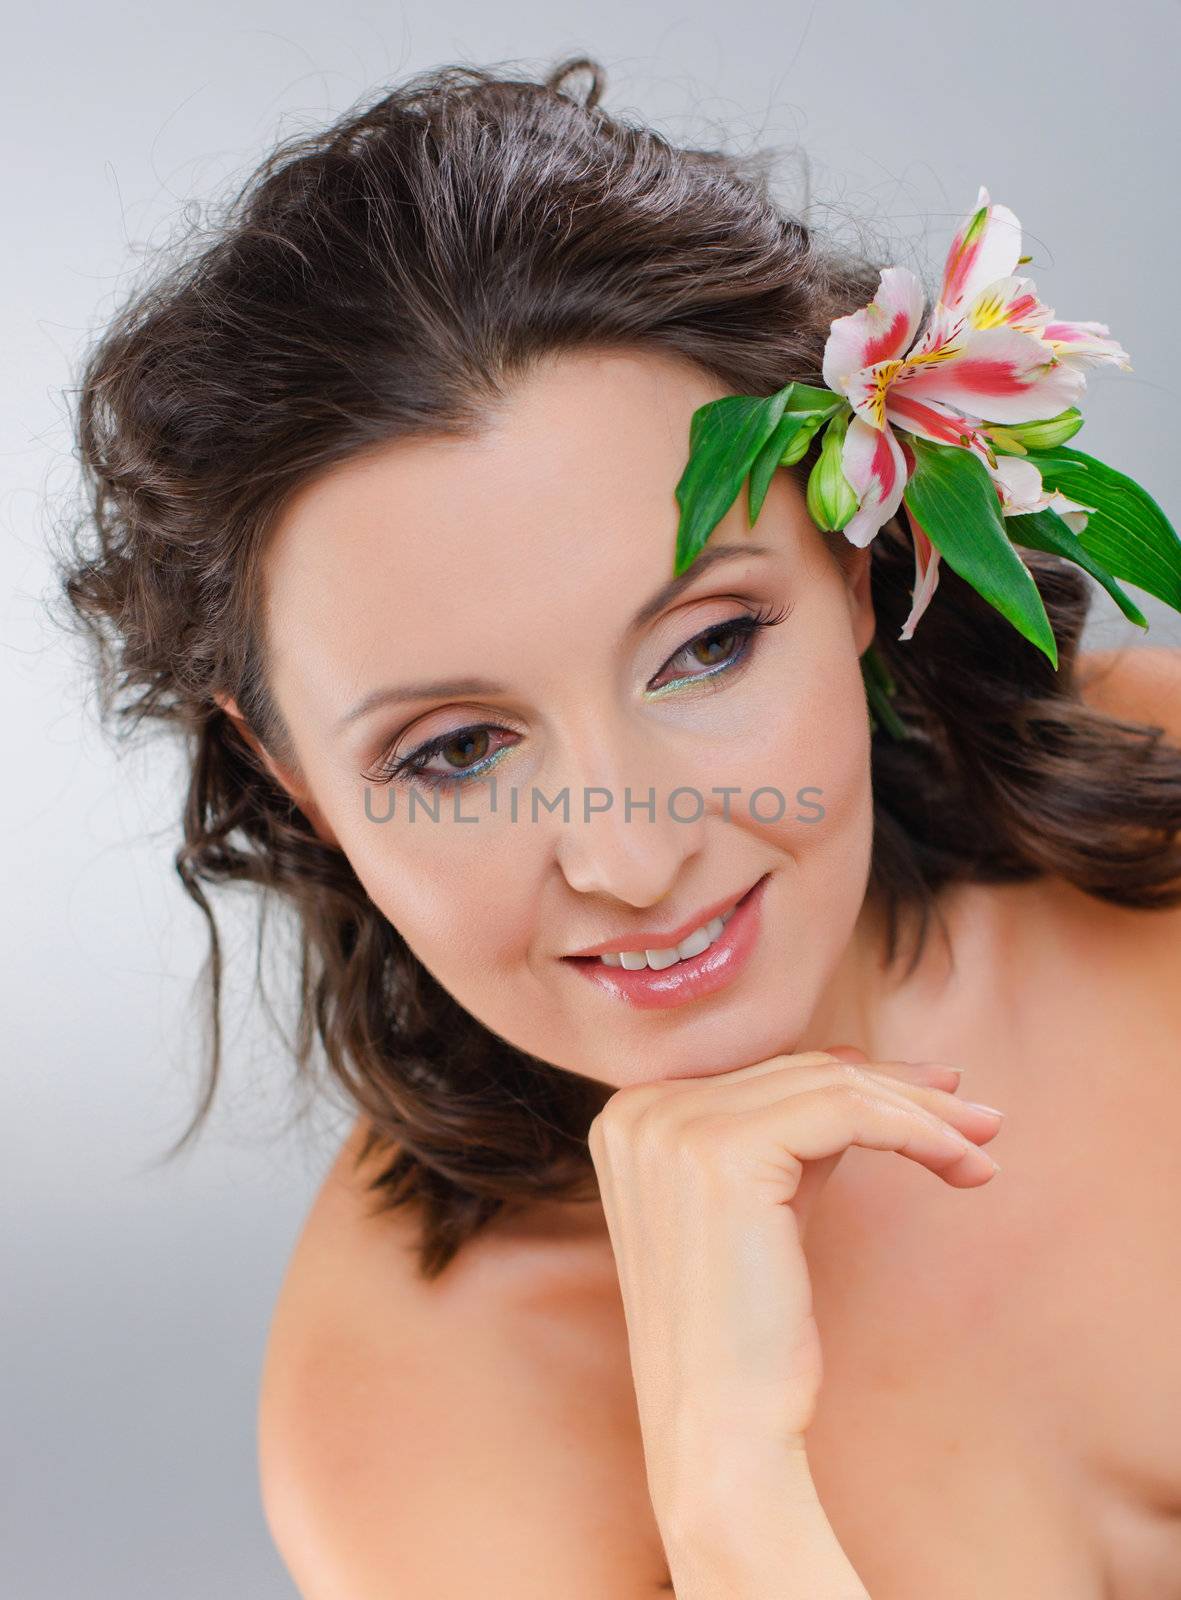 Beautiful young woman with fashion make-up by maxoliki